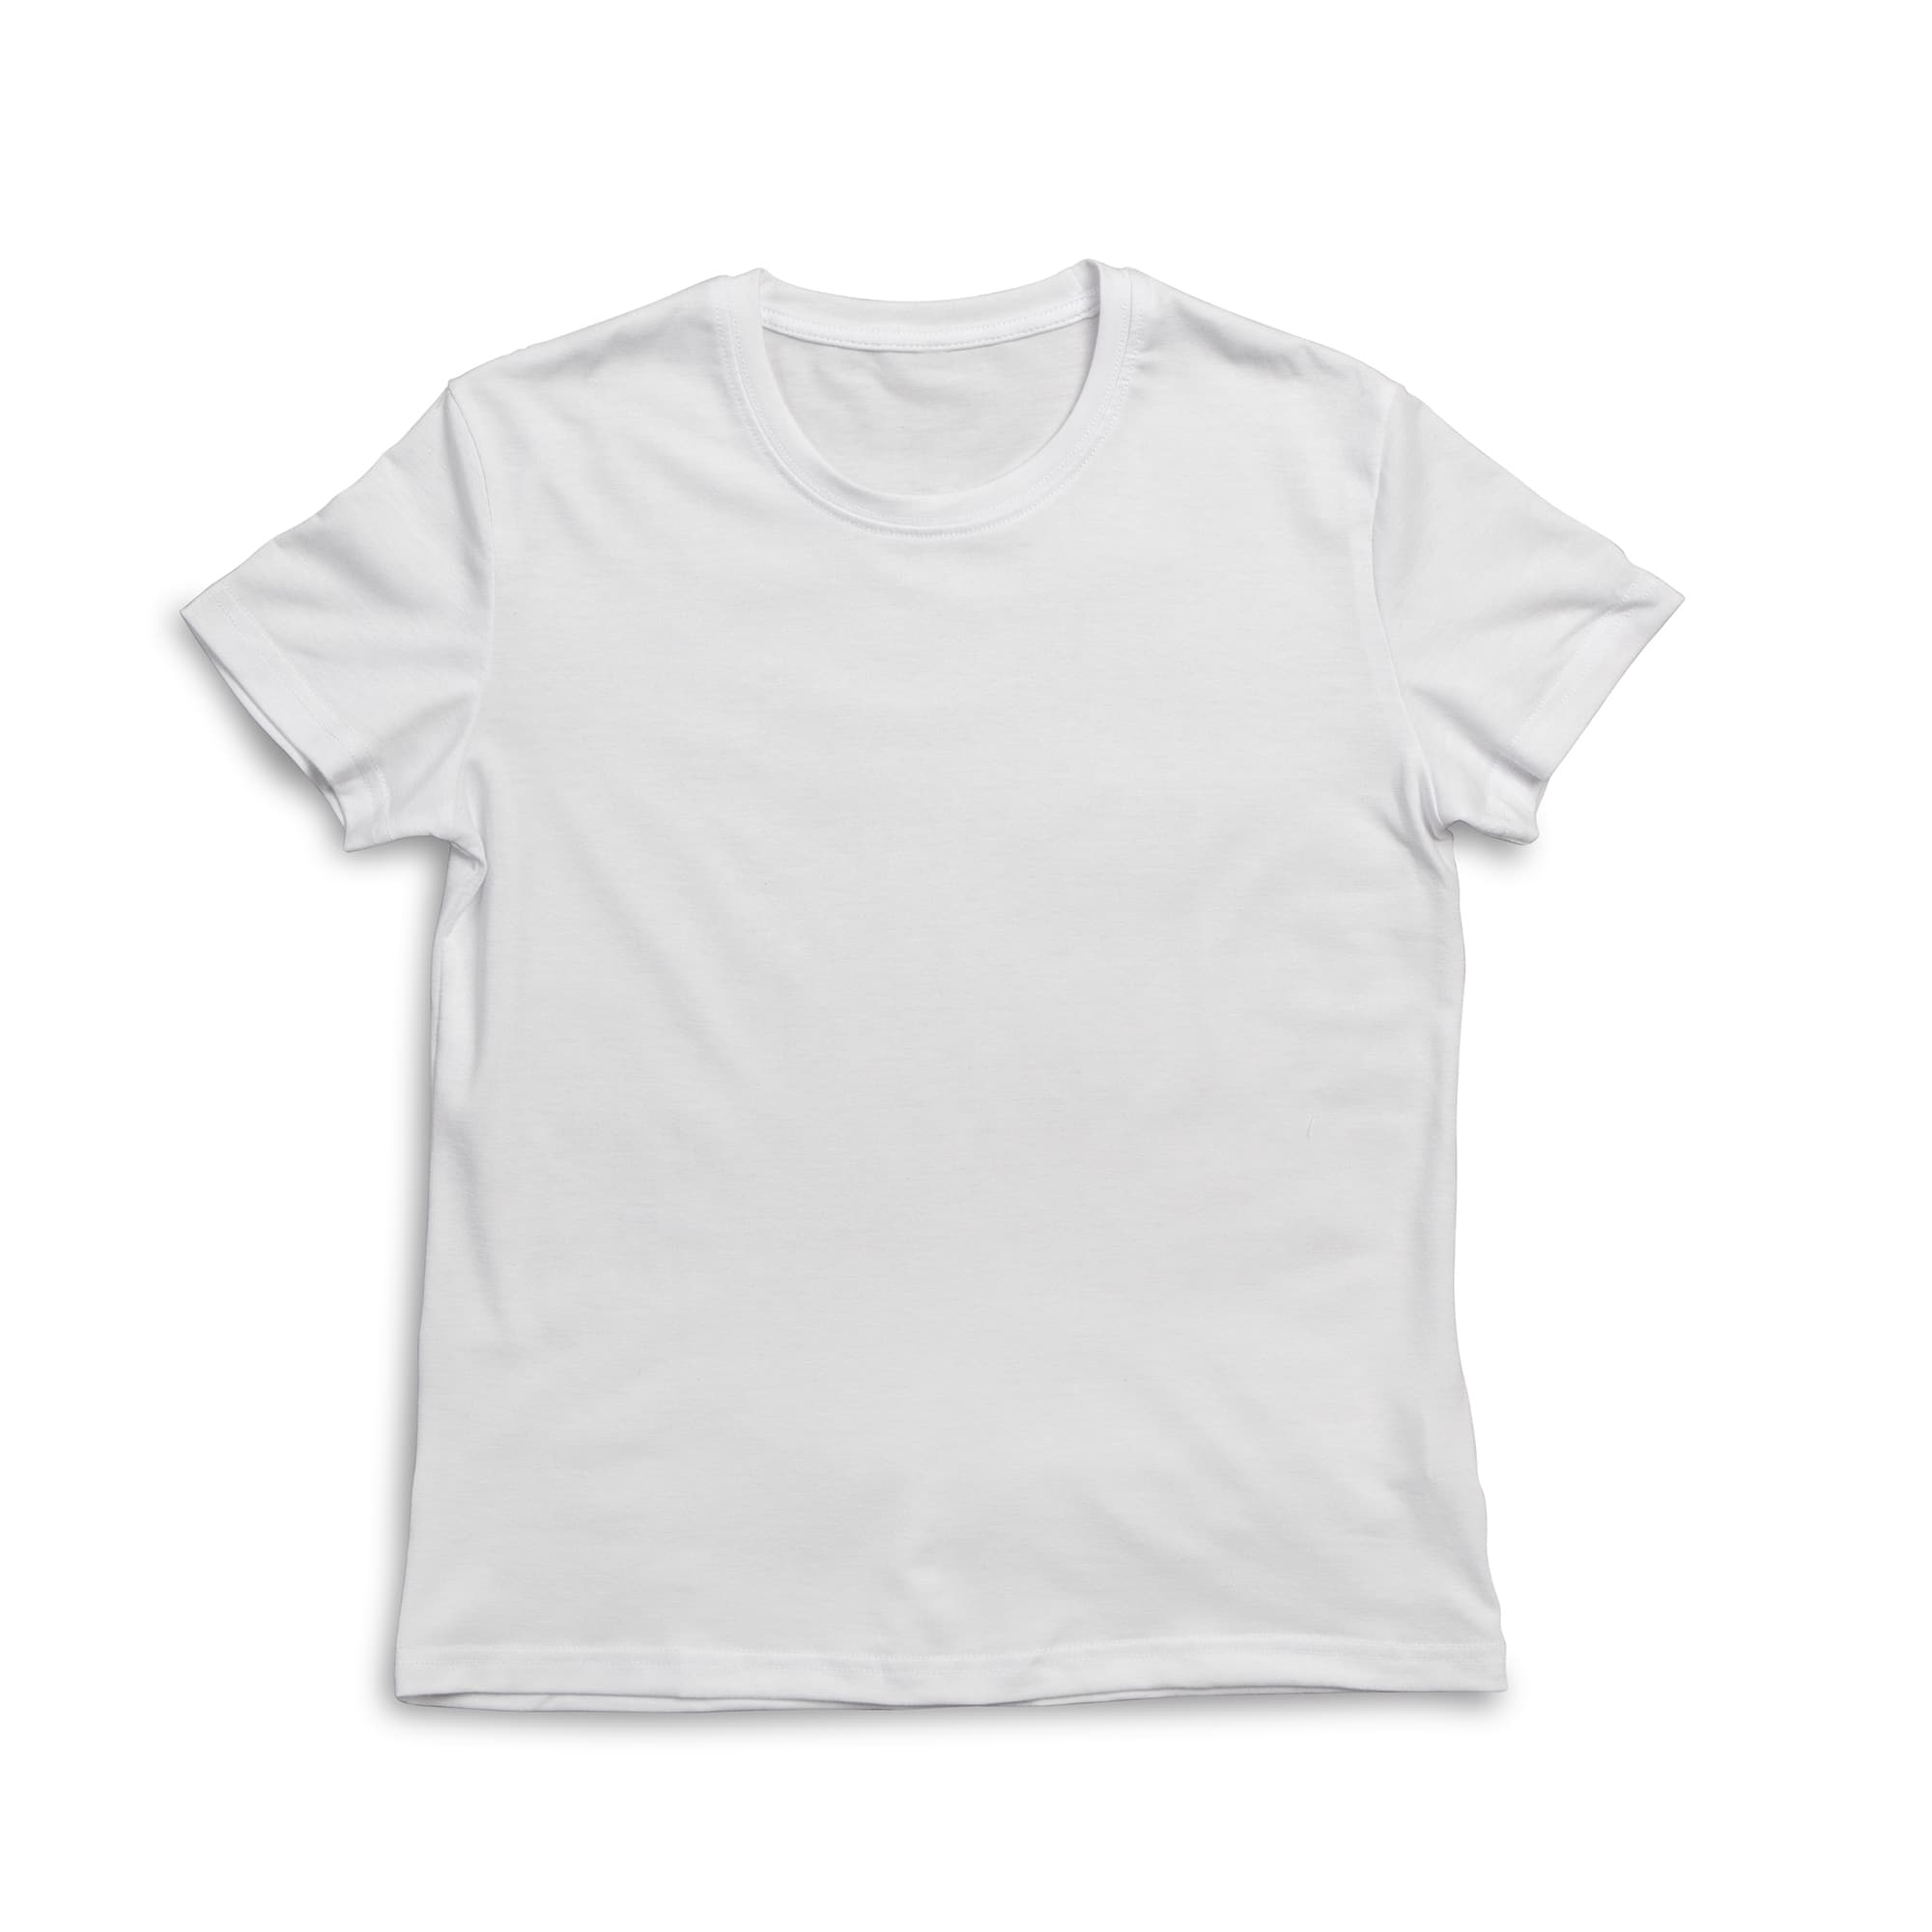 Australsk person universitetsområde Gøre klart Cricut® White Blank Youth Crew Neck T-Shirt | Michaels.com